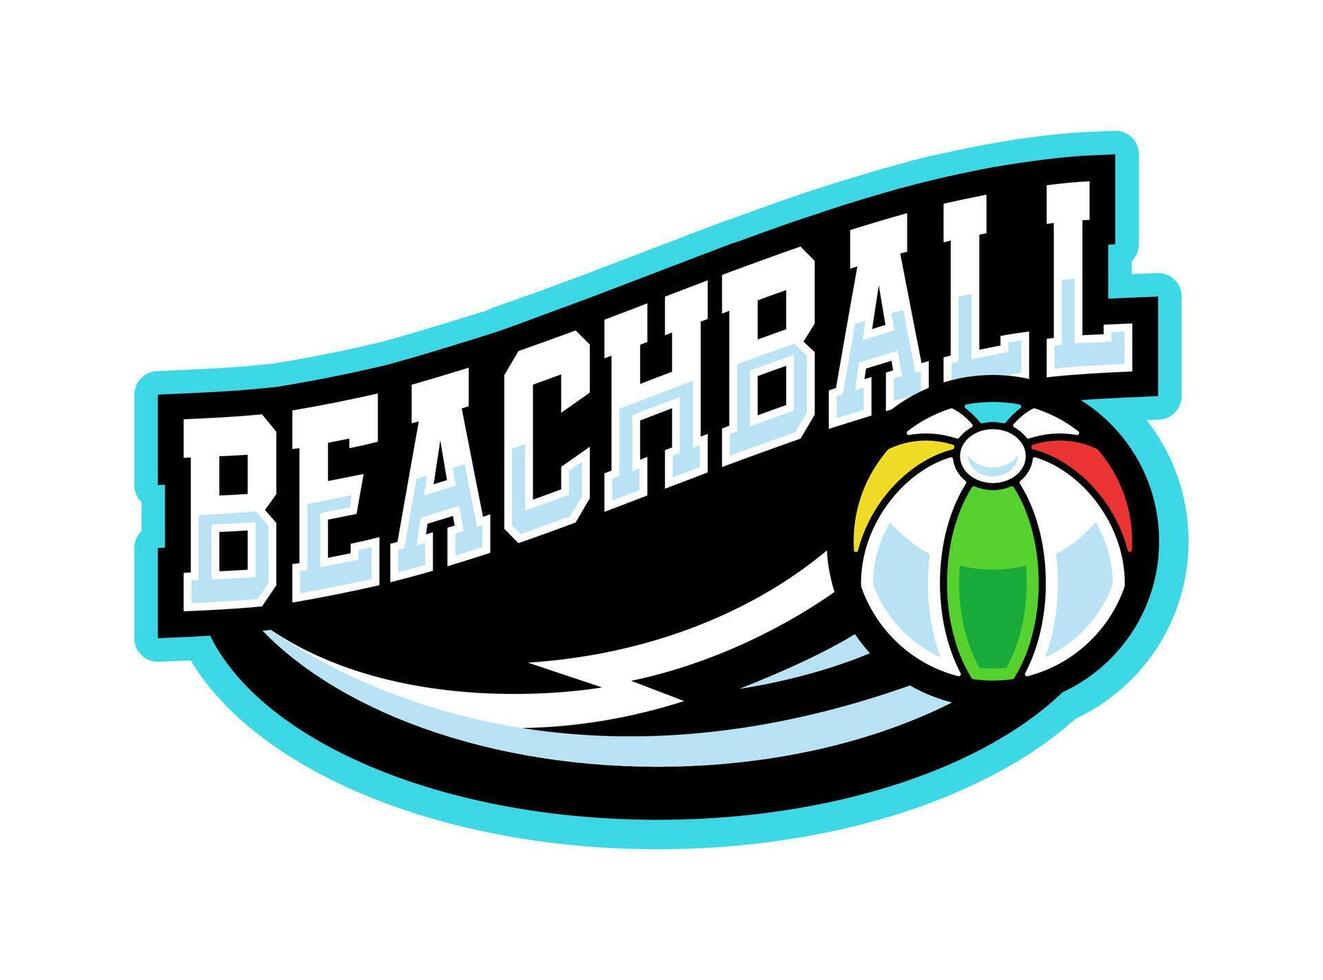 BEACH VOLLEYBALL TEAM LOGO TEMPLATE vector